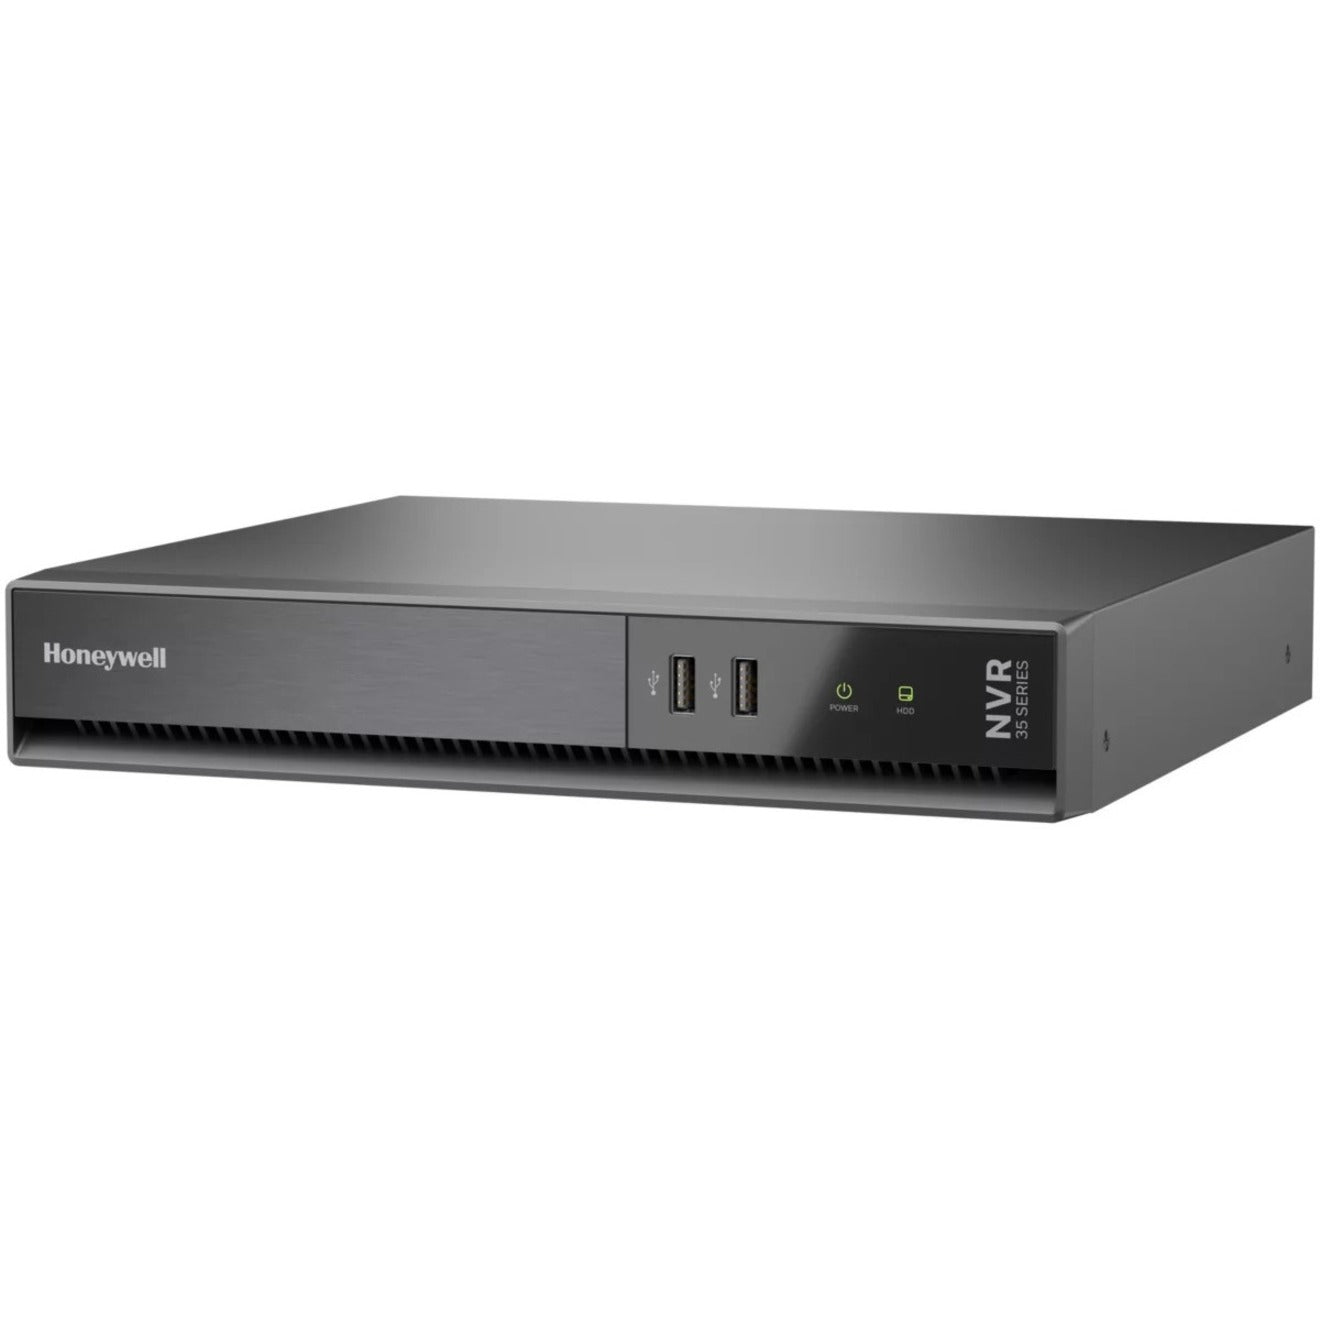 Honeywell HN35040102 35 Series Embedded NVR, 2 TB HDD, 4K Video Surveillance Station